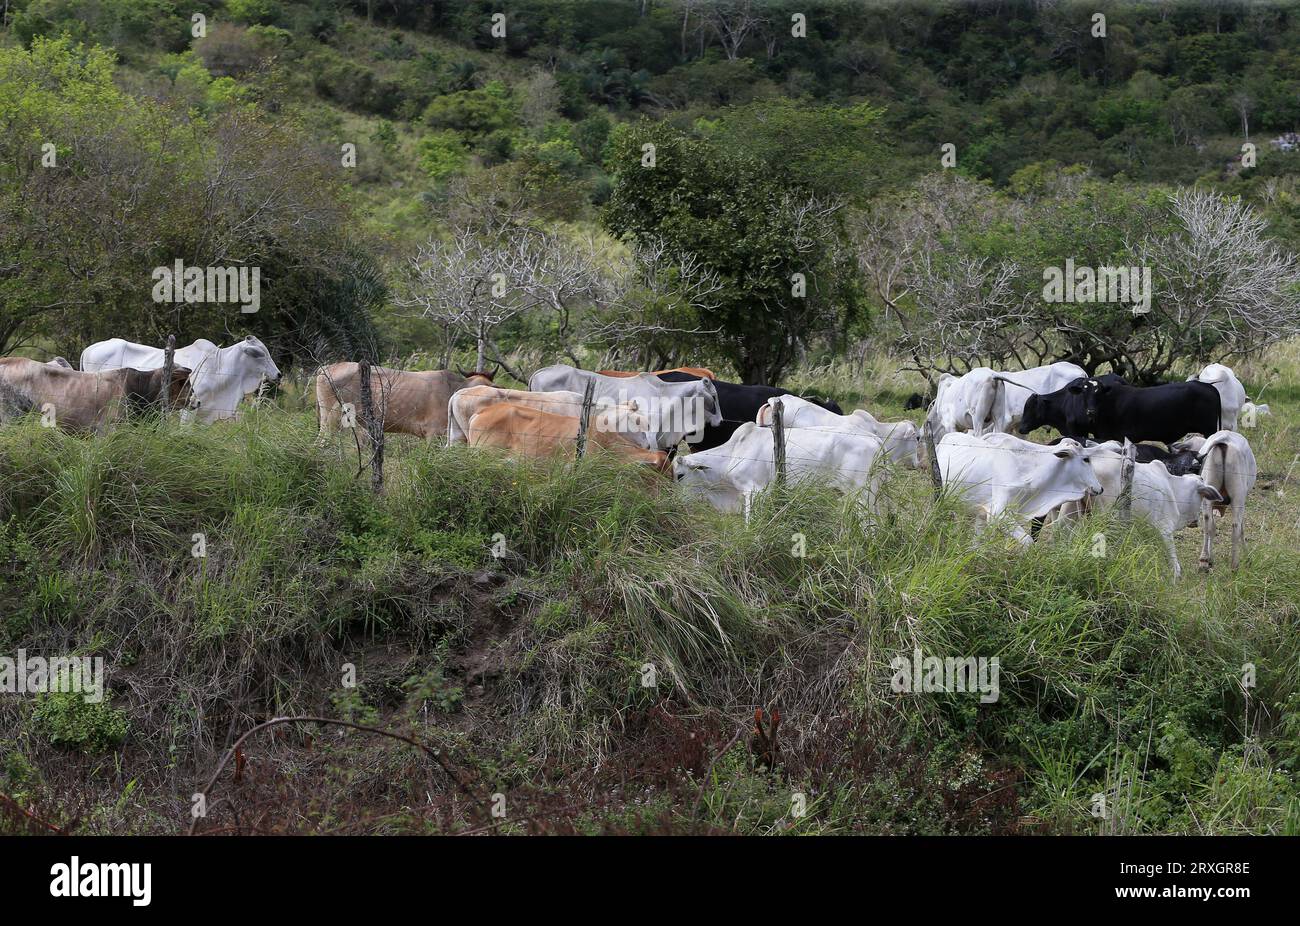 feira de santana, bahia, brasilien - 4. september 2022: Viehzucht in einem Gebiet des caatinga-Bioms im Nordosten Brasiliens. Stockfoto